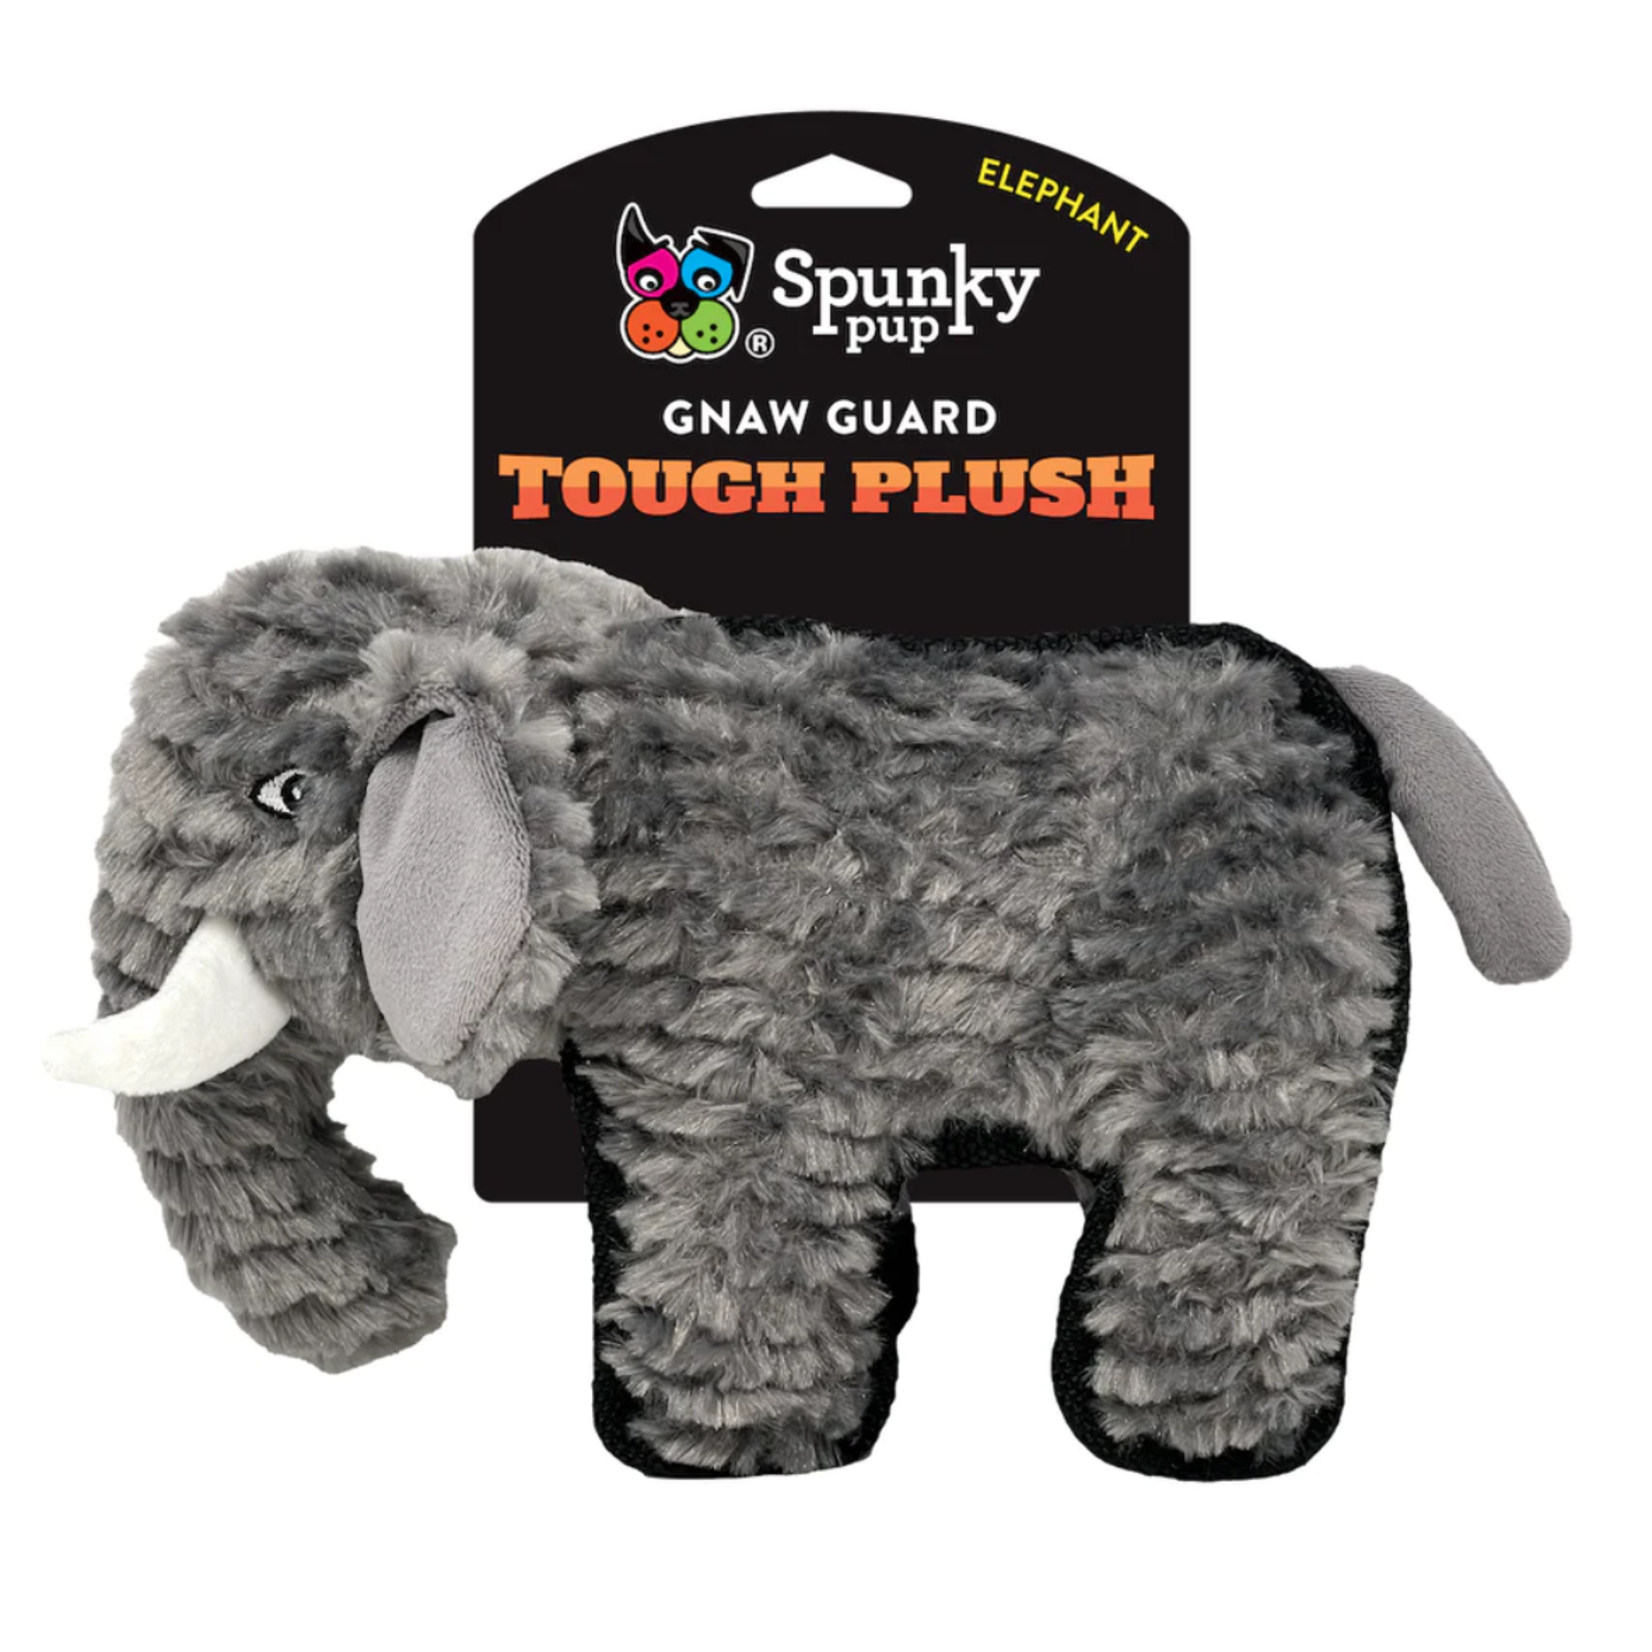 Spunky Pup Spunky Pup Dog Toys - Tough Plush Durable 3 Layer - Elephant